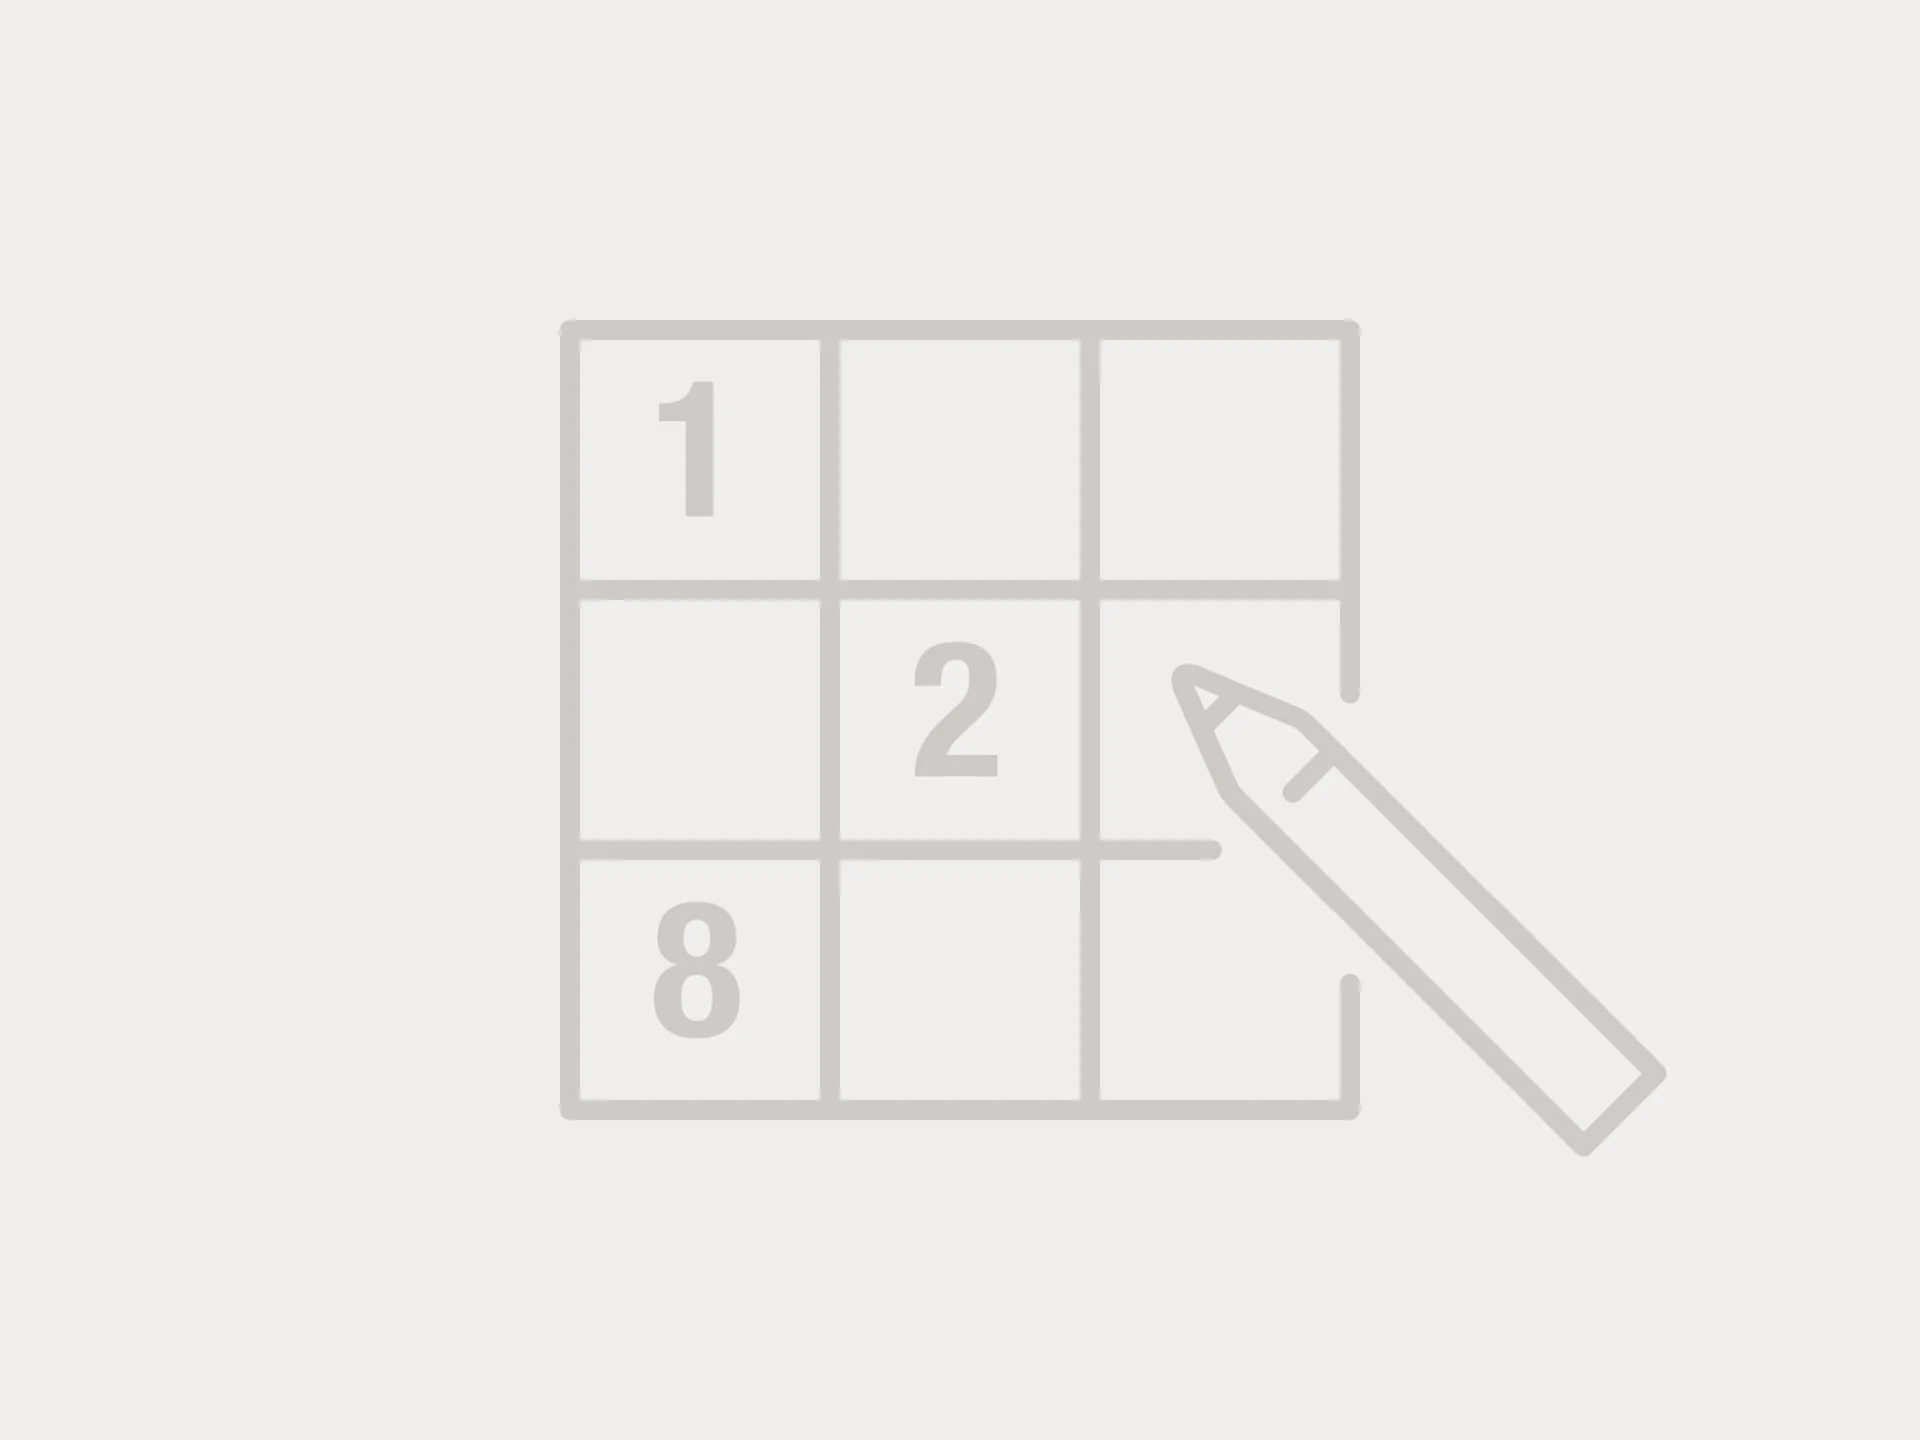 Illustration eines Sudoku